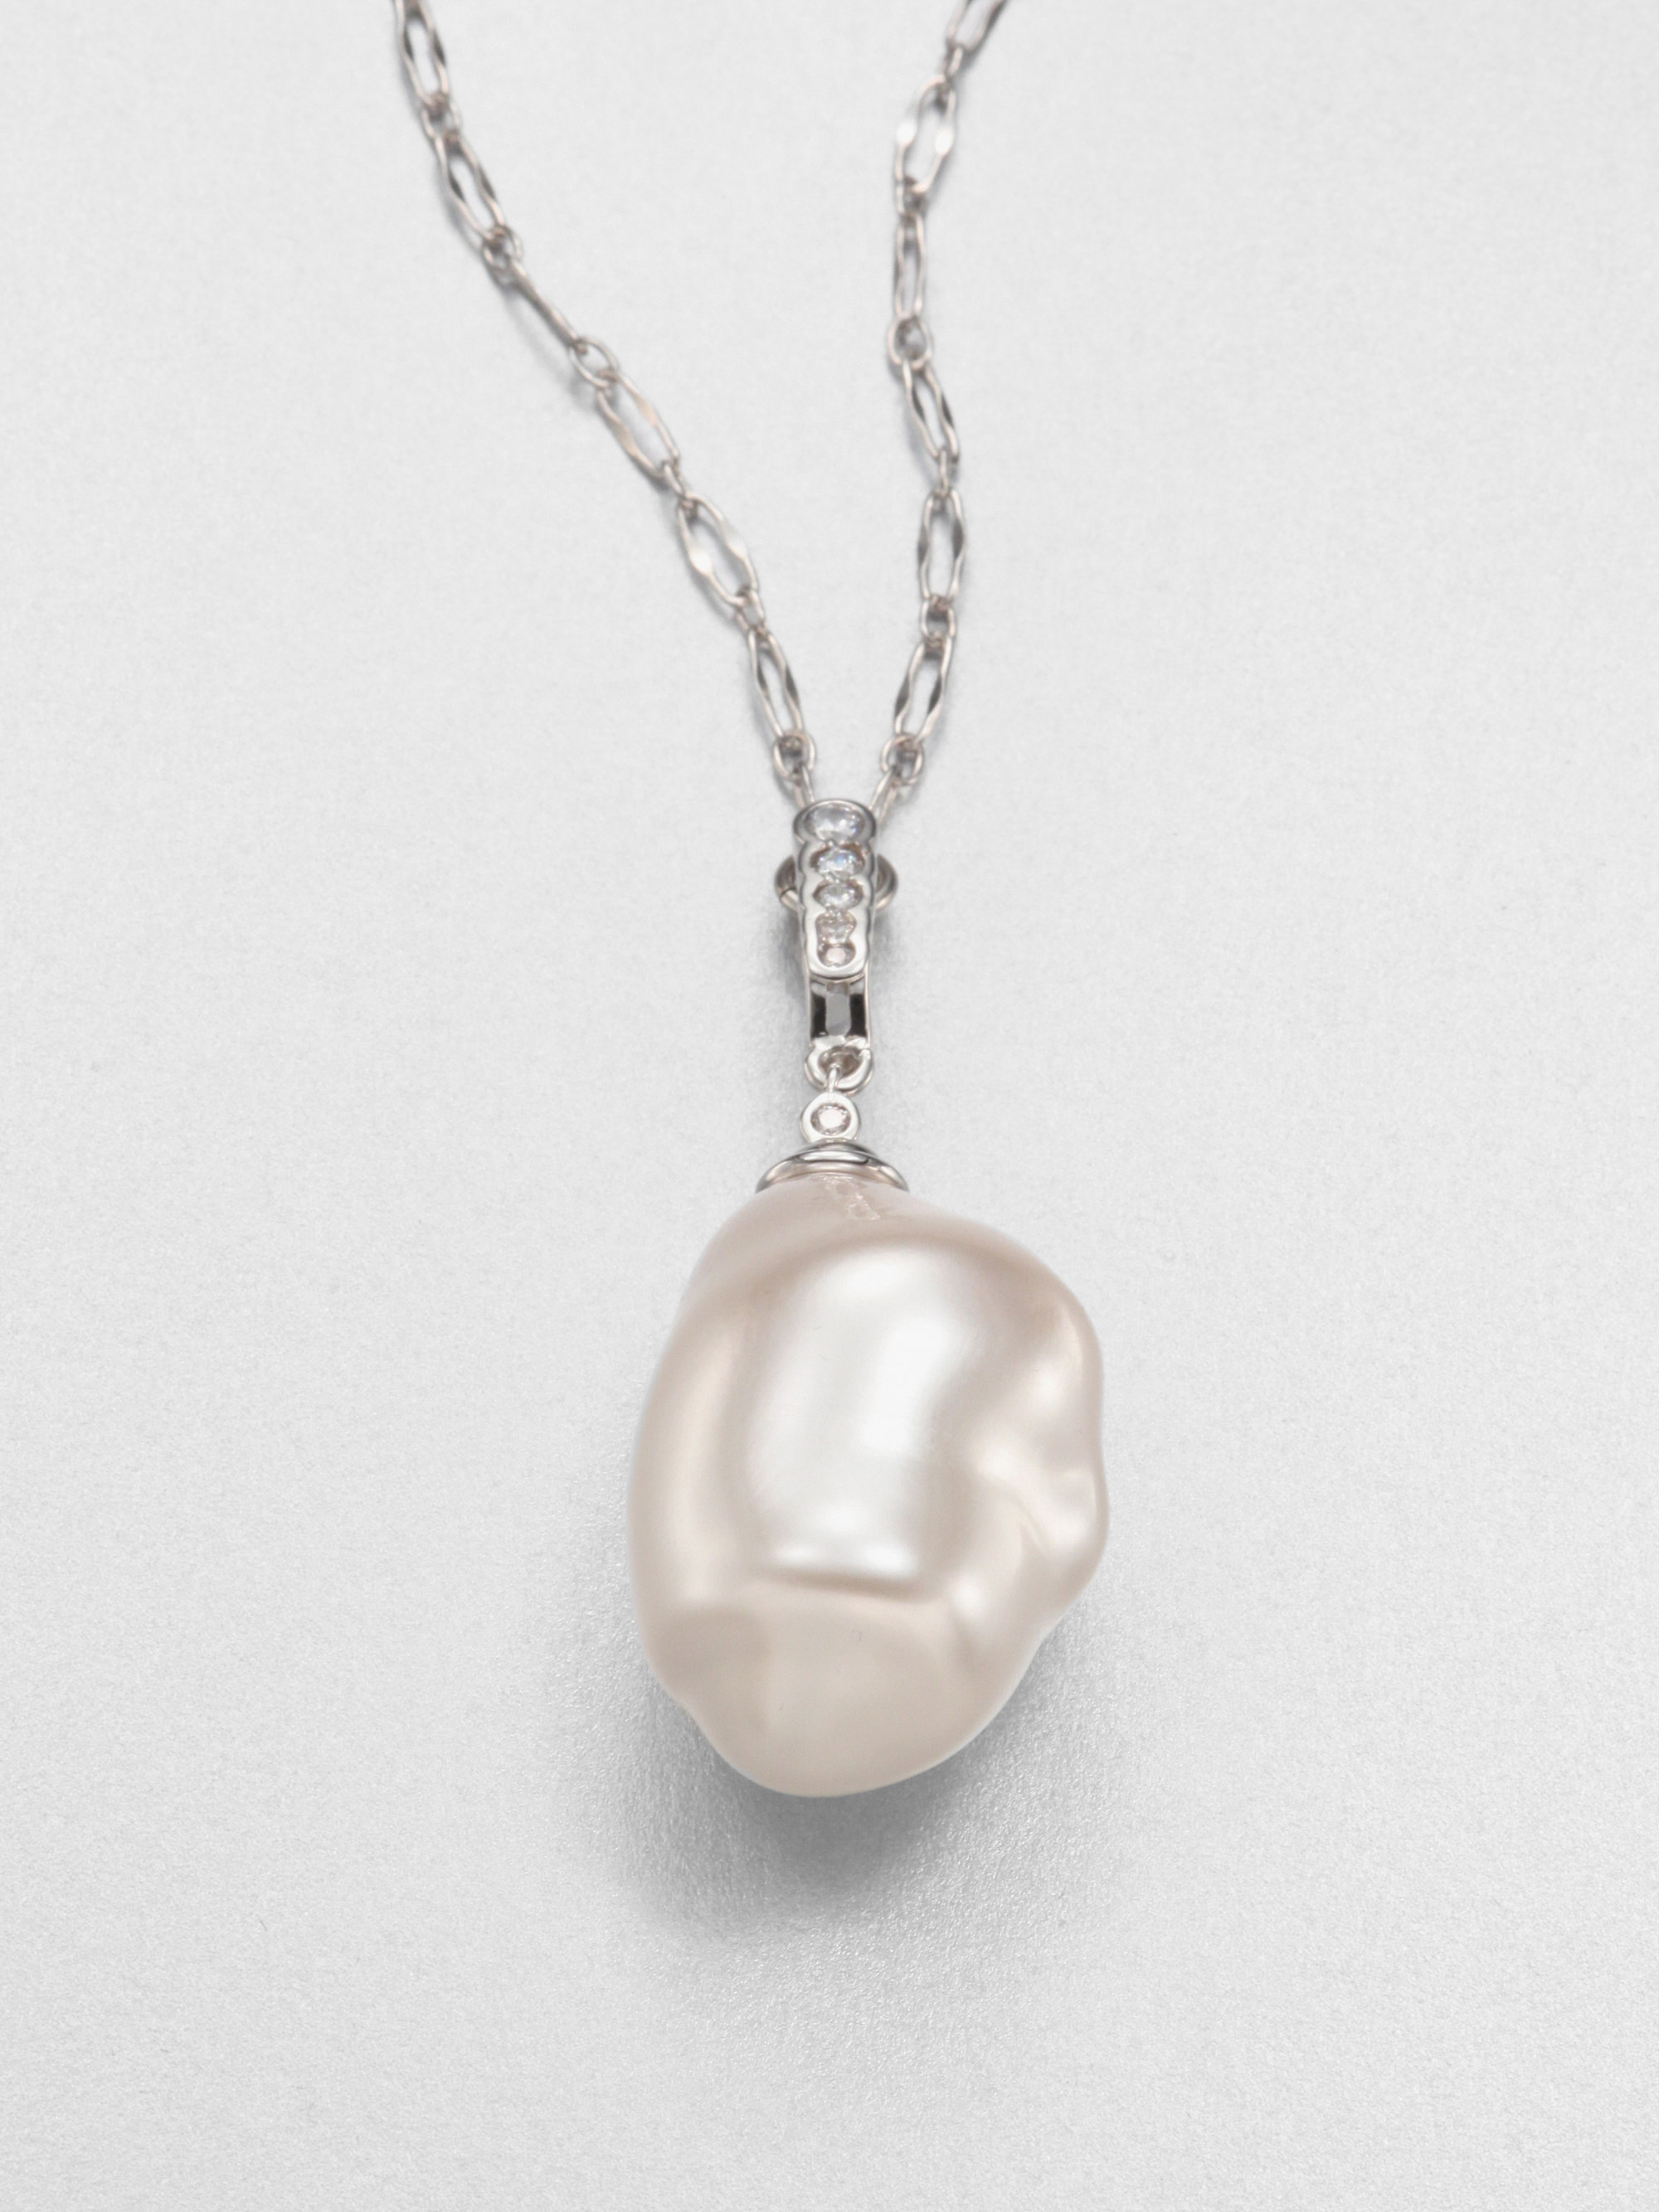 Baroque pearl silver pendant on silver chain